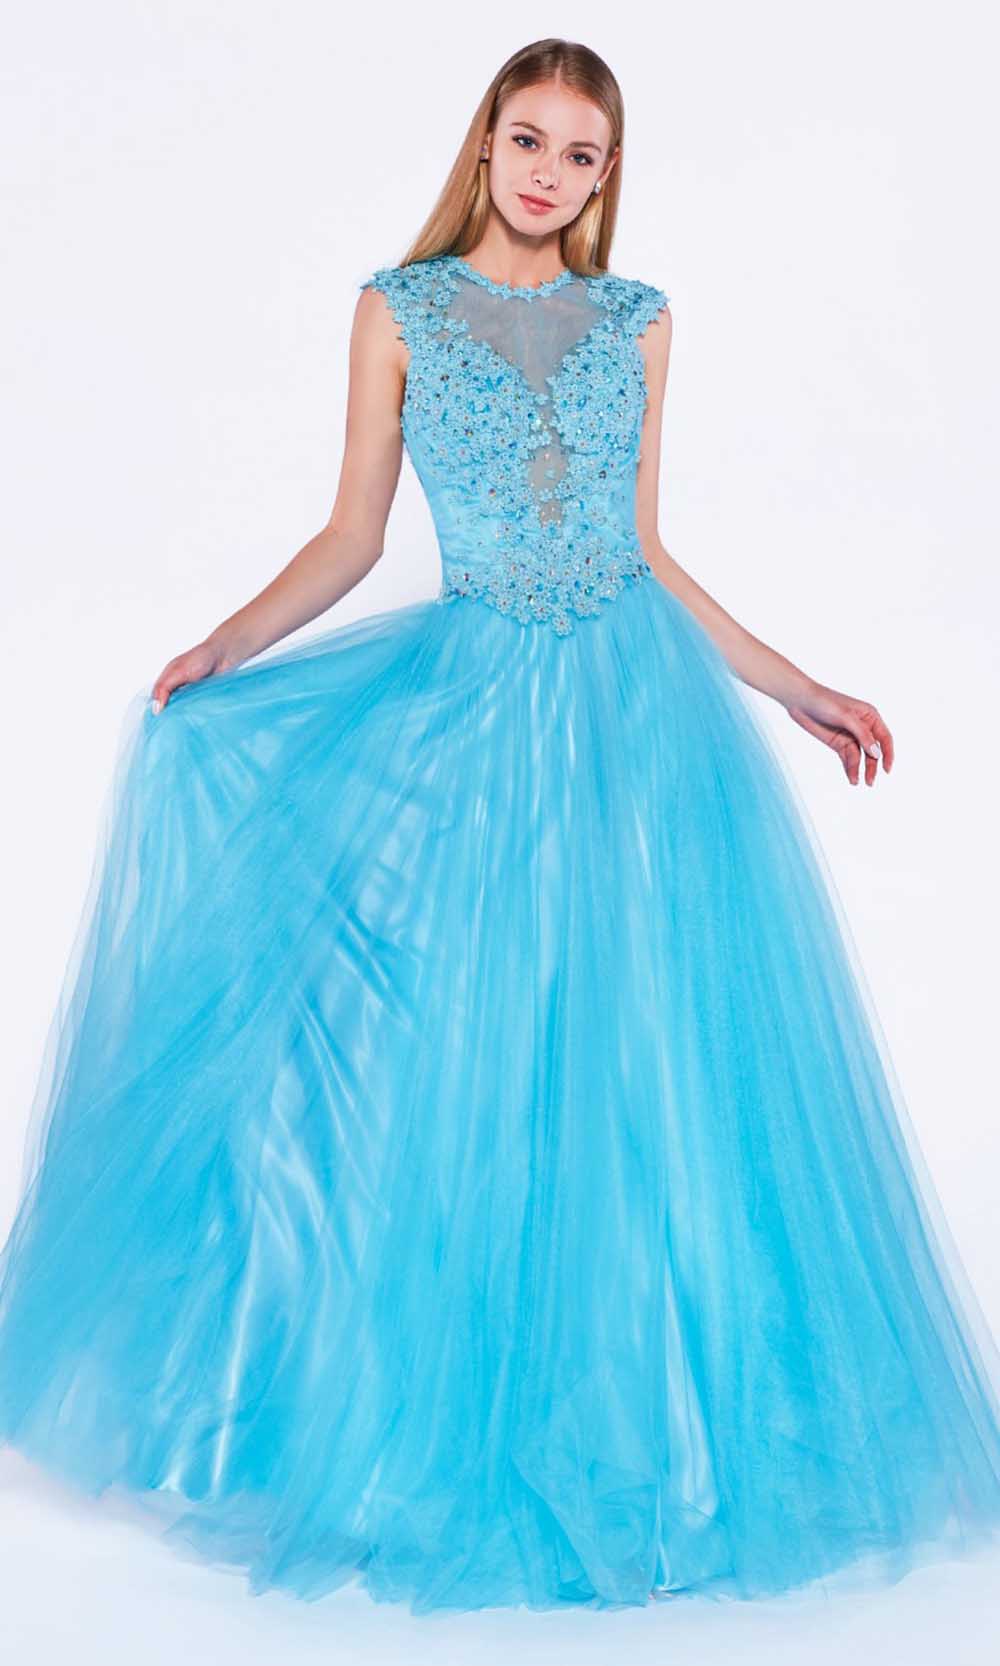 Image of Ladivine 7635 - Ornate Lace Illusion Jewel A-Line Dress